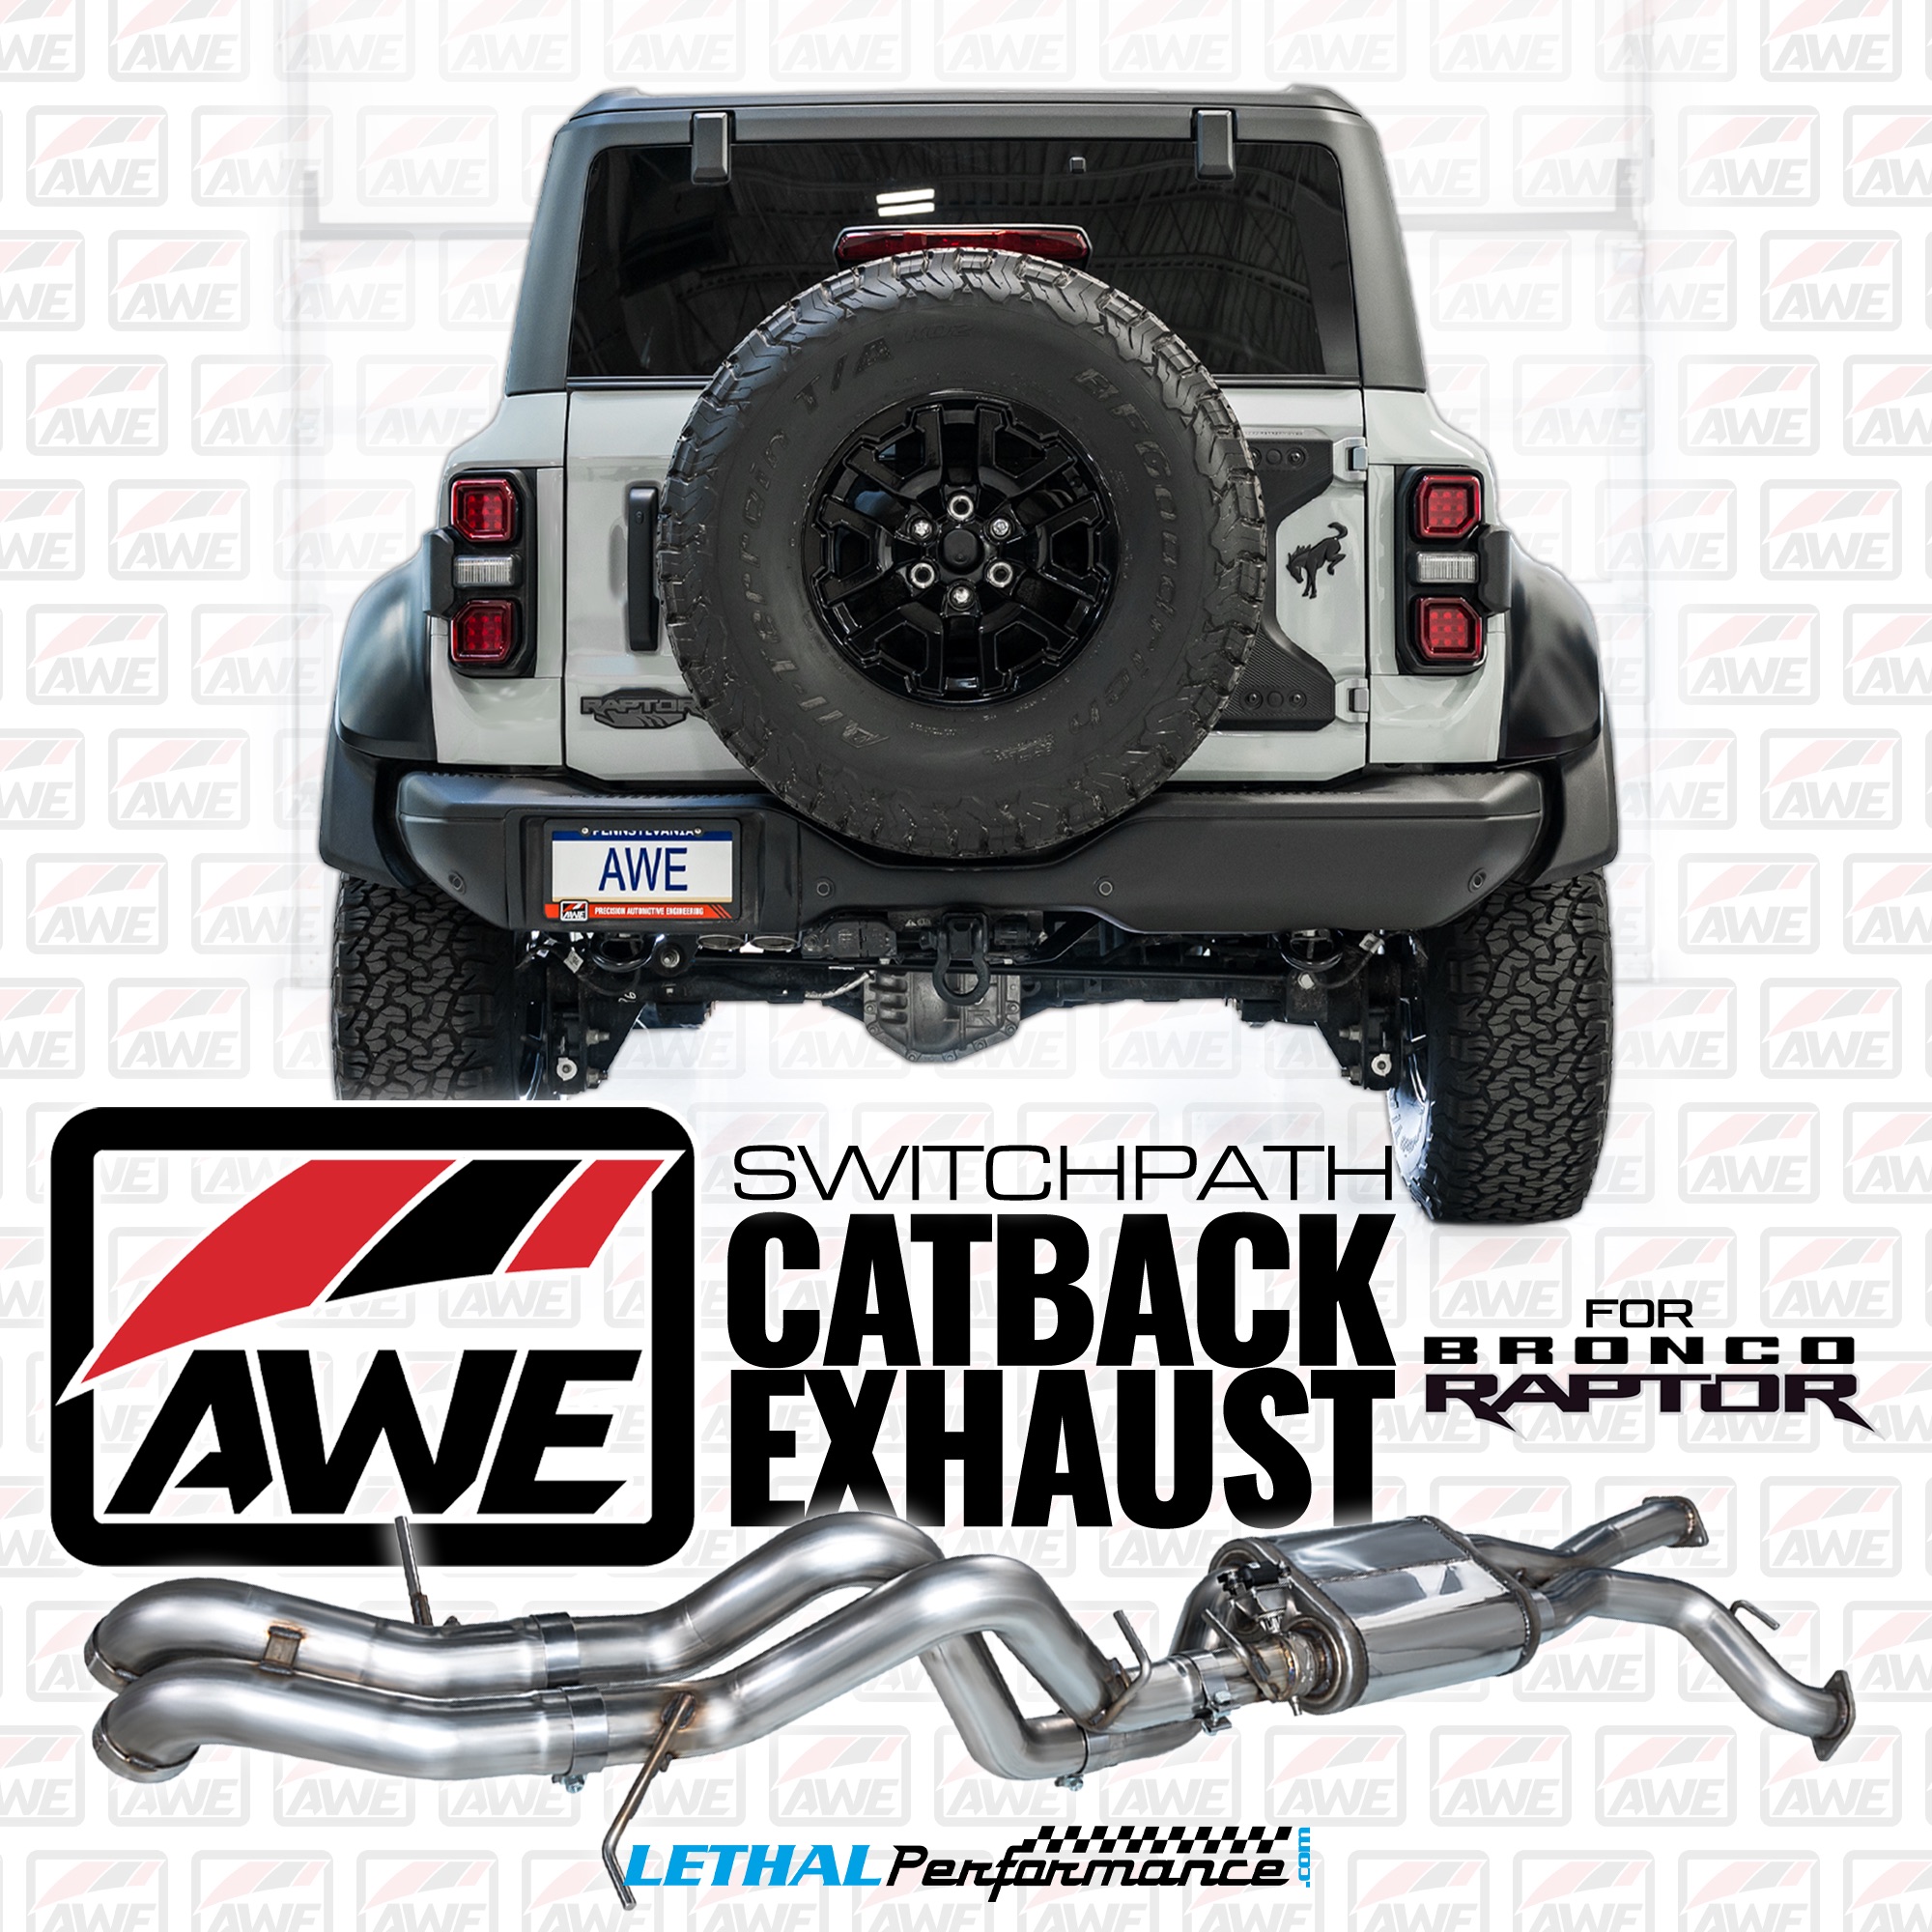 Ford Bronco AWE SwitchPath Catback Exhaust for Bronco Raptor! braptor awe (3)